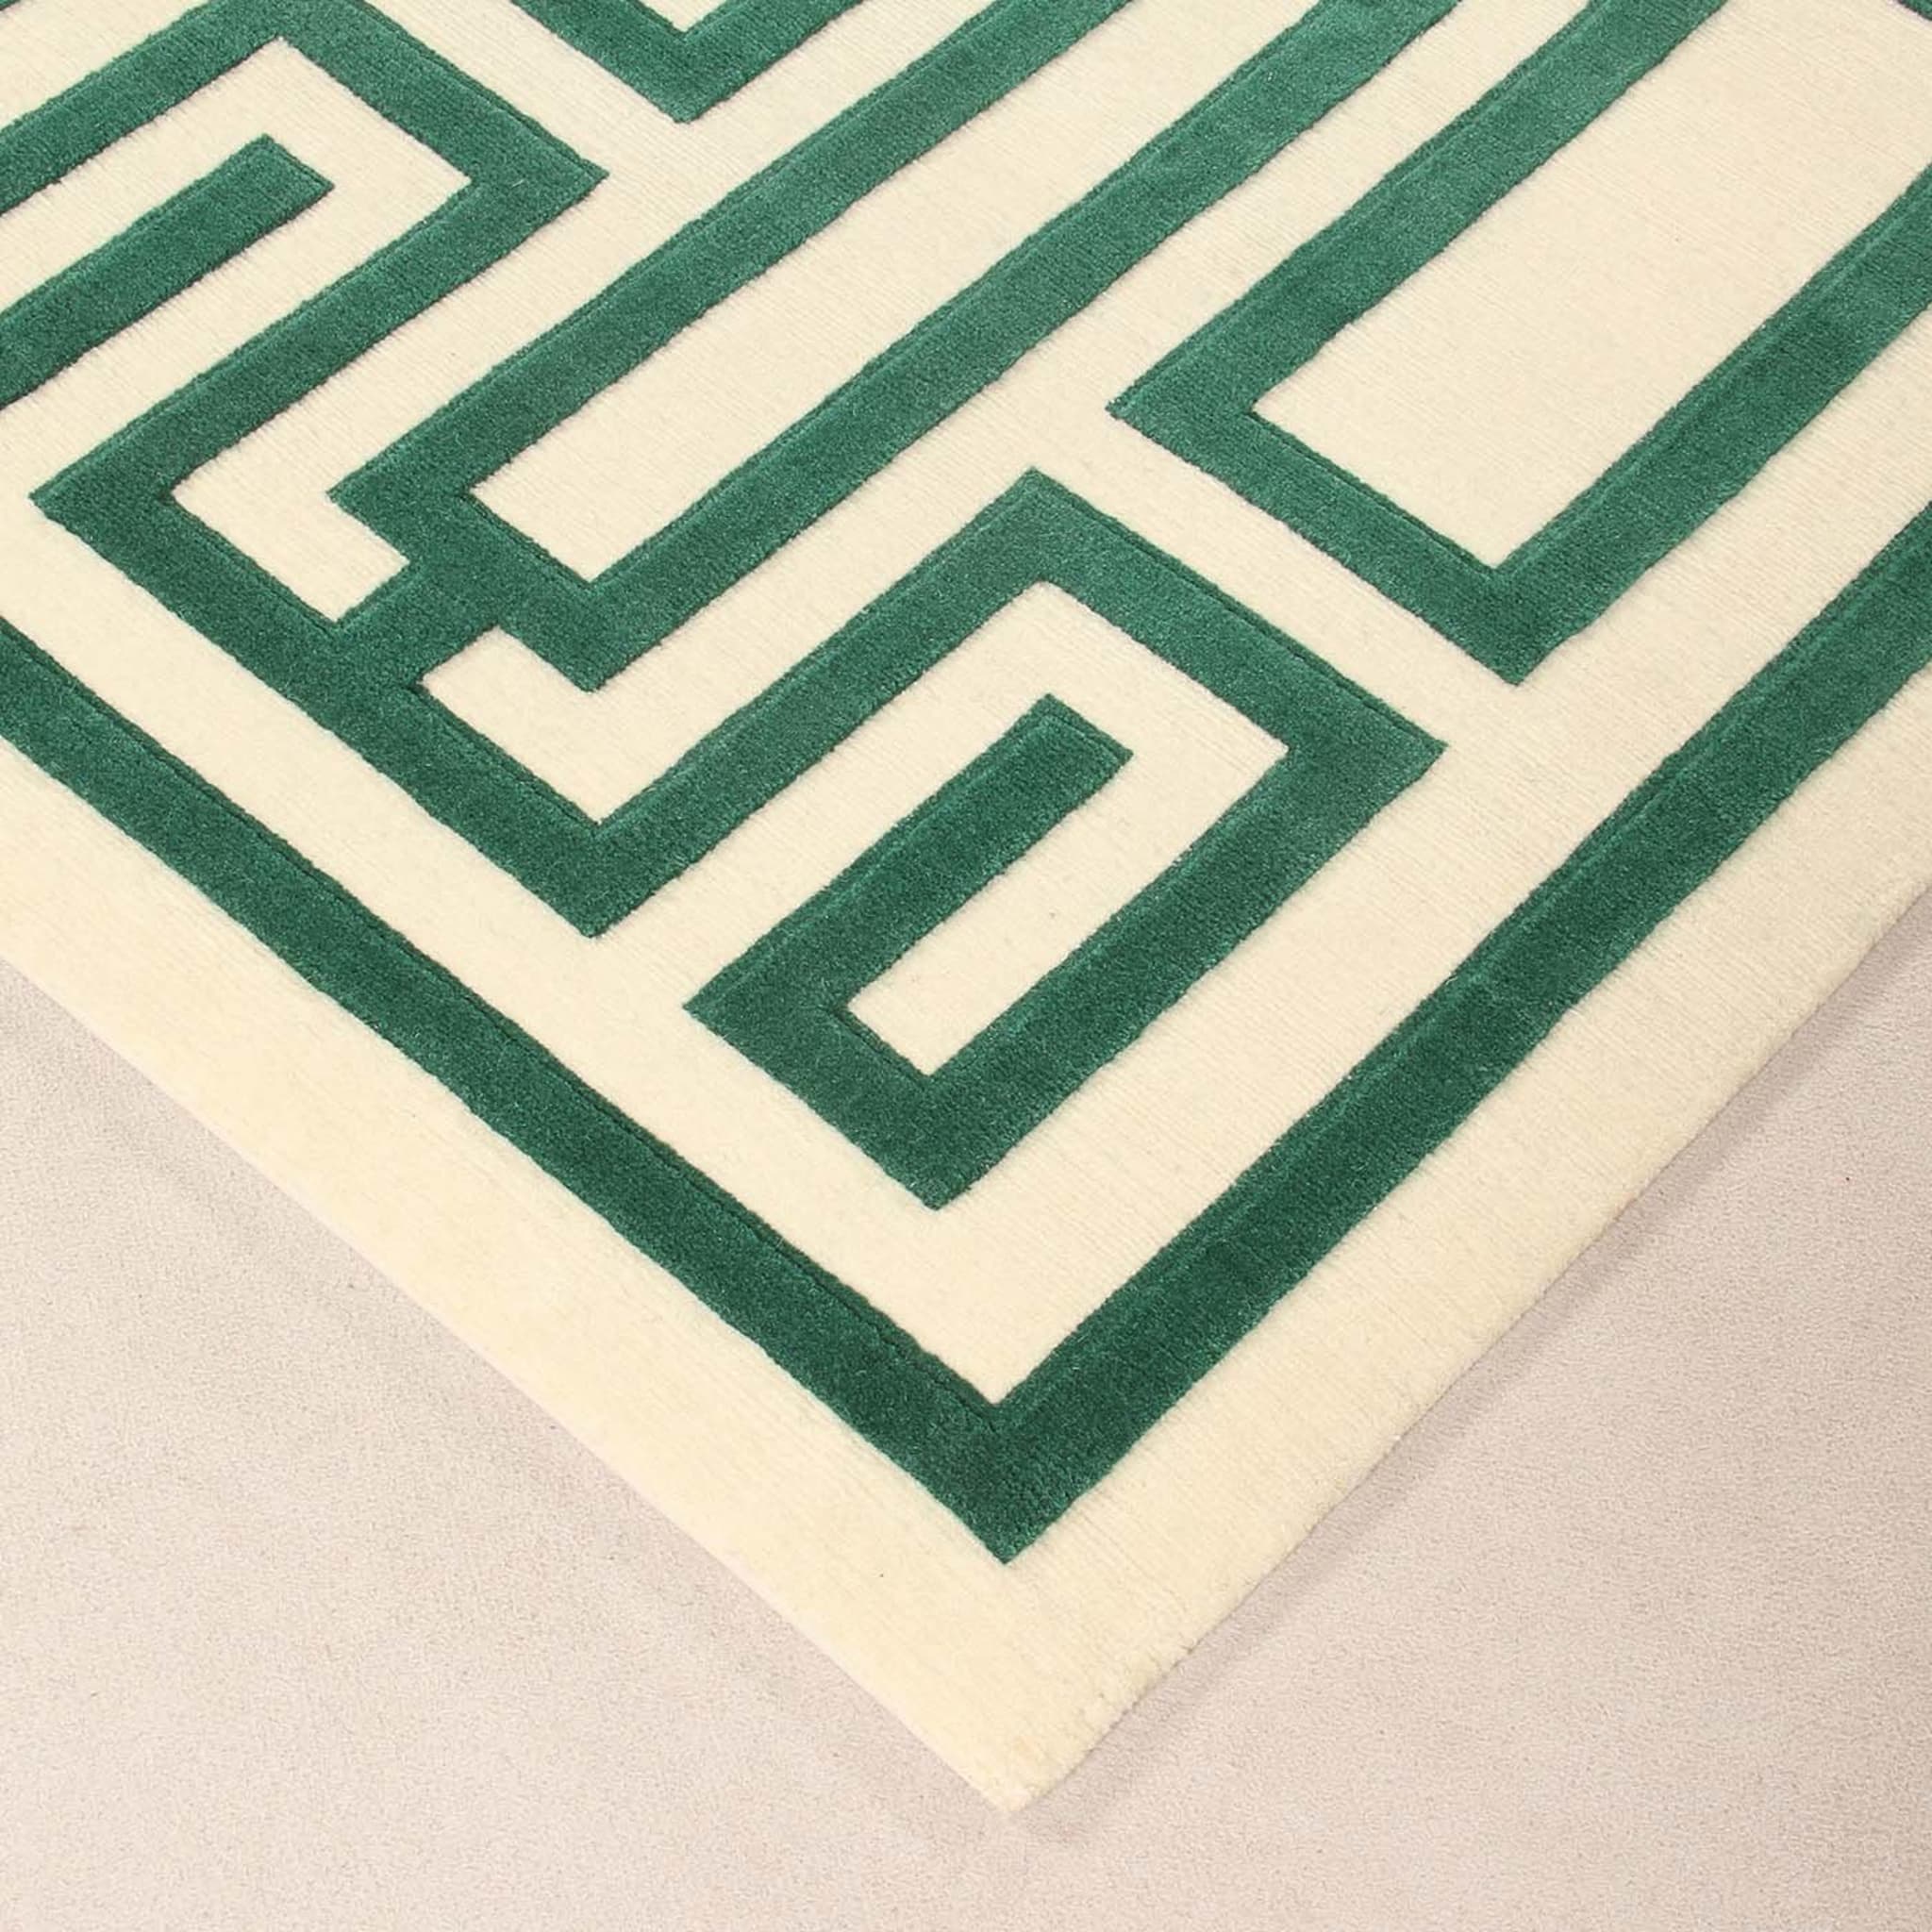 Labirinto Green Carpet by Gio Ponti - Alternative view 1